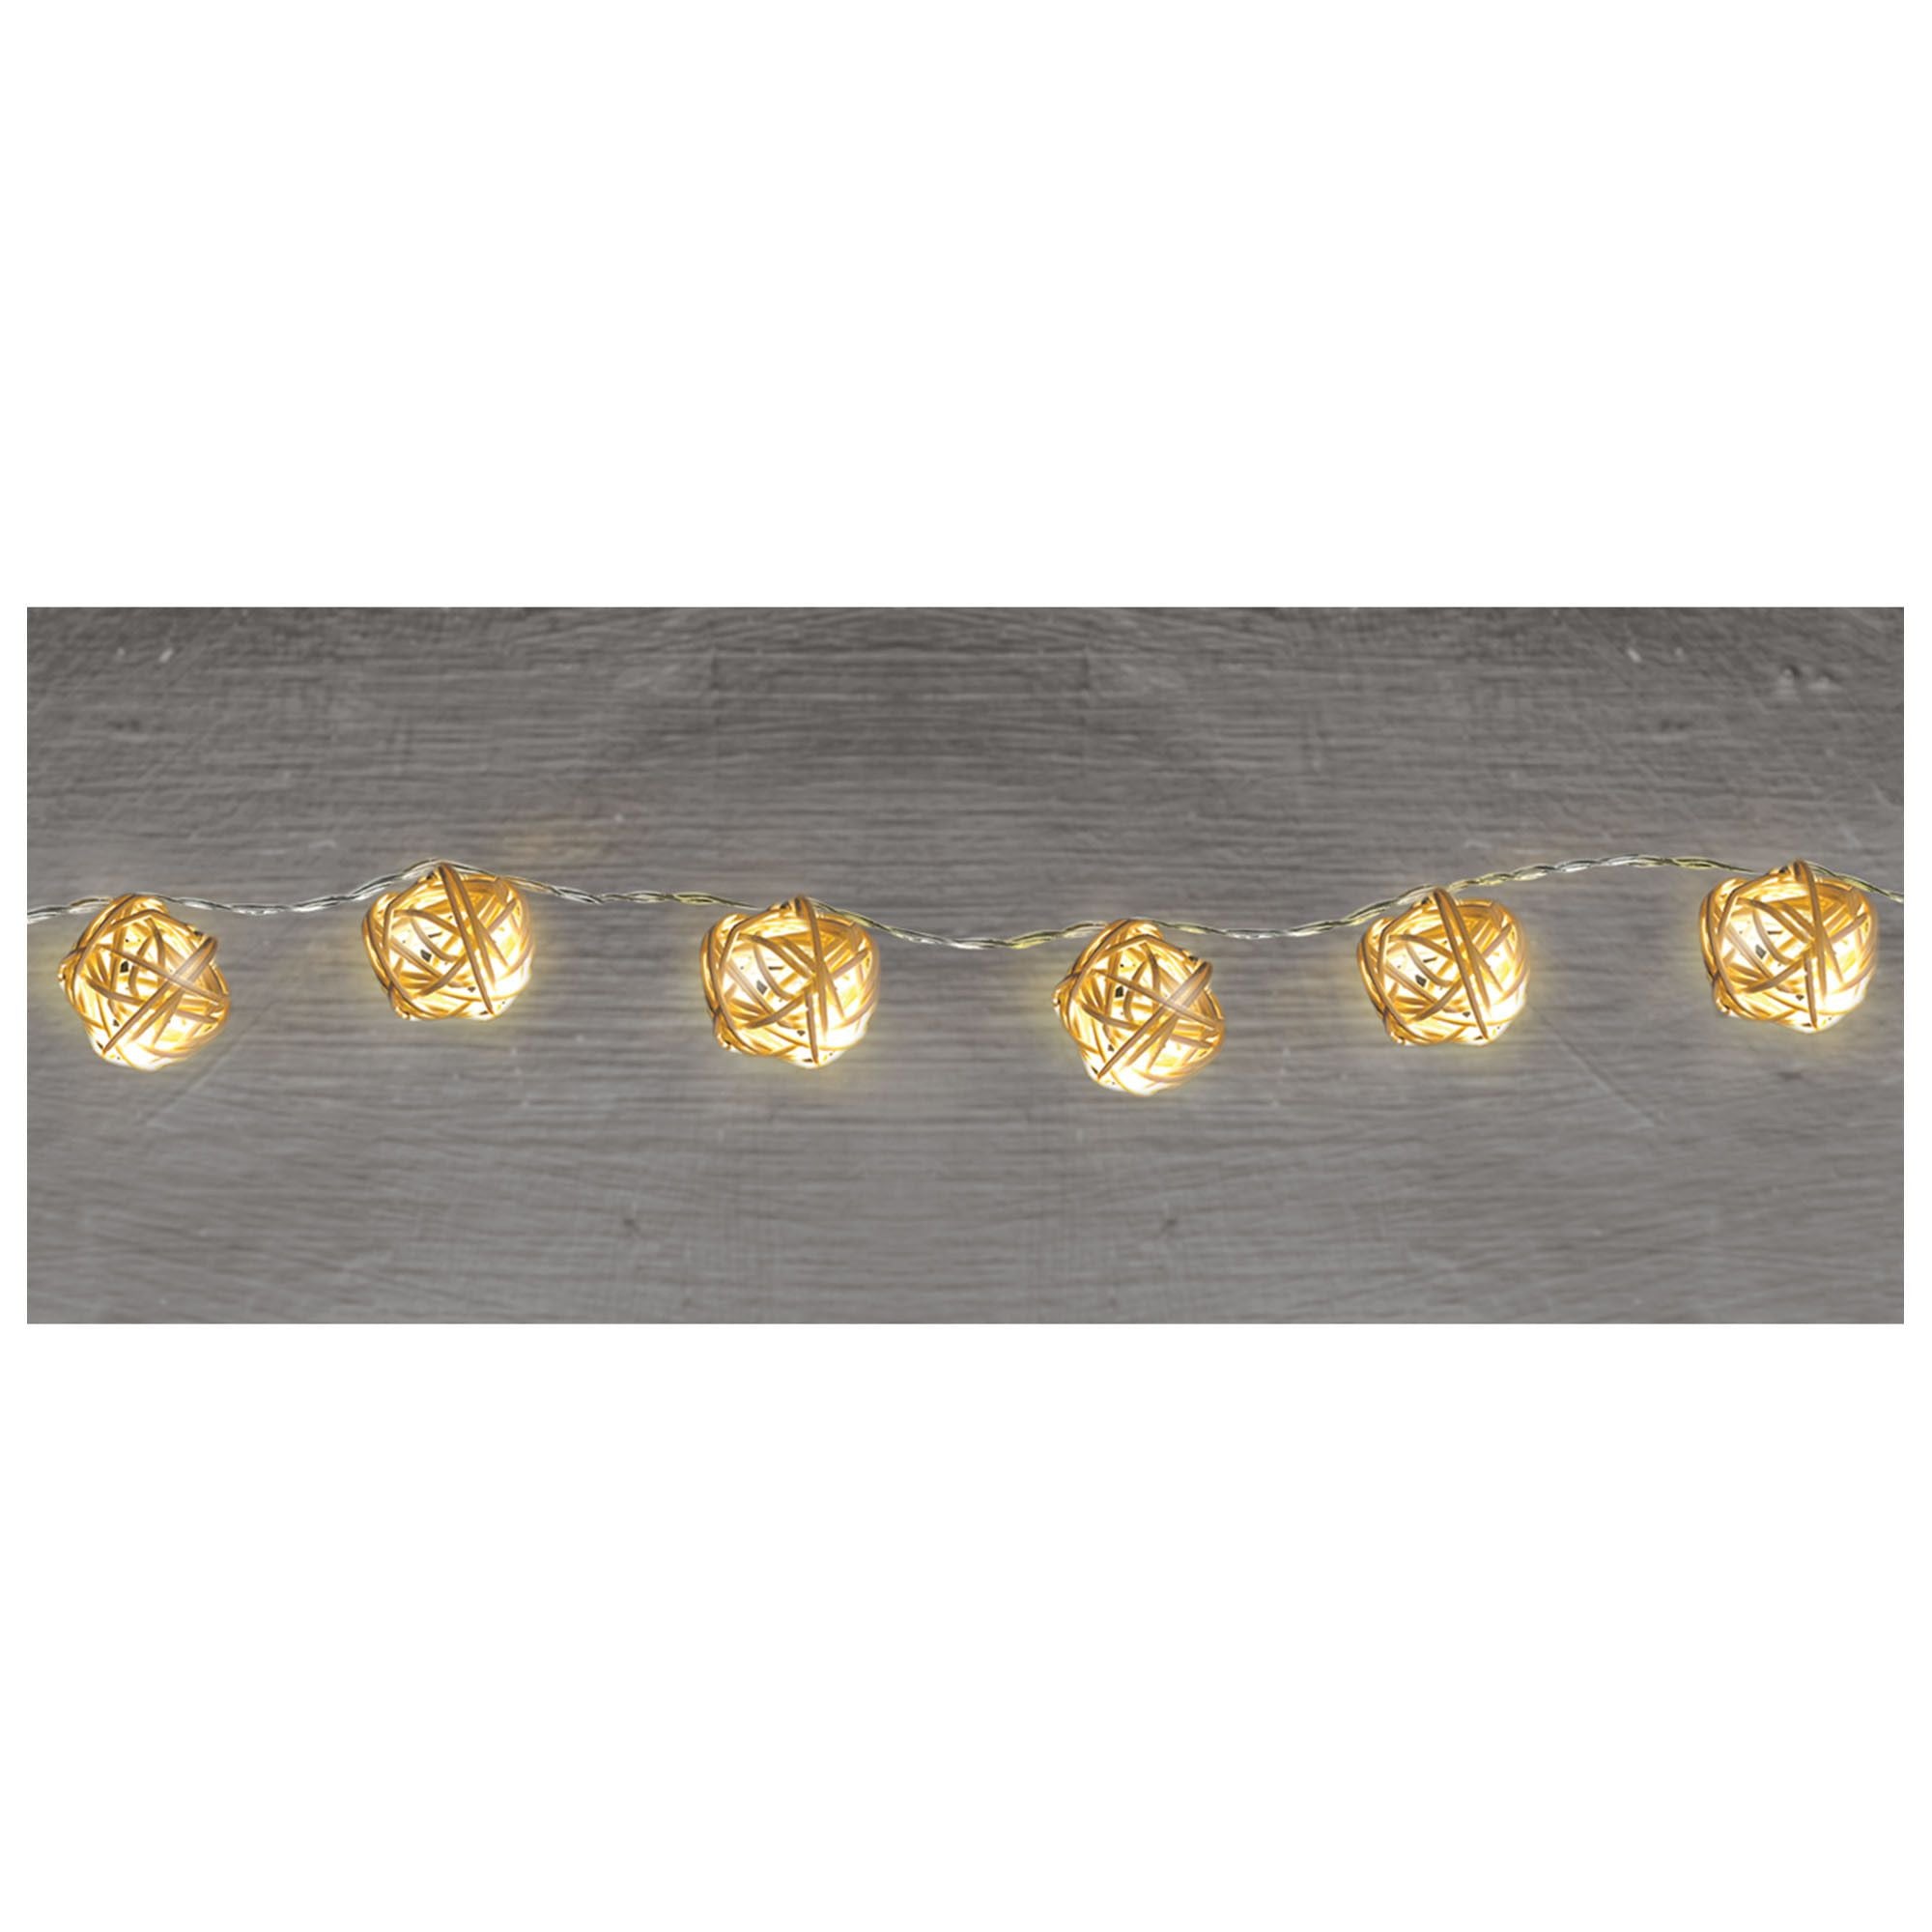 Amscan WEDDING Mini Globe String LED Lights - Gold